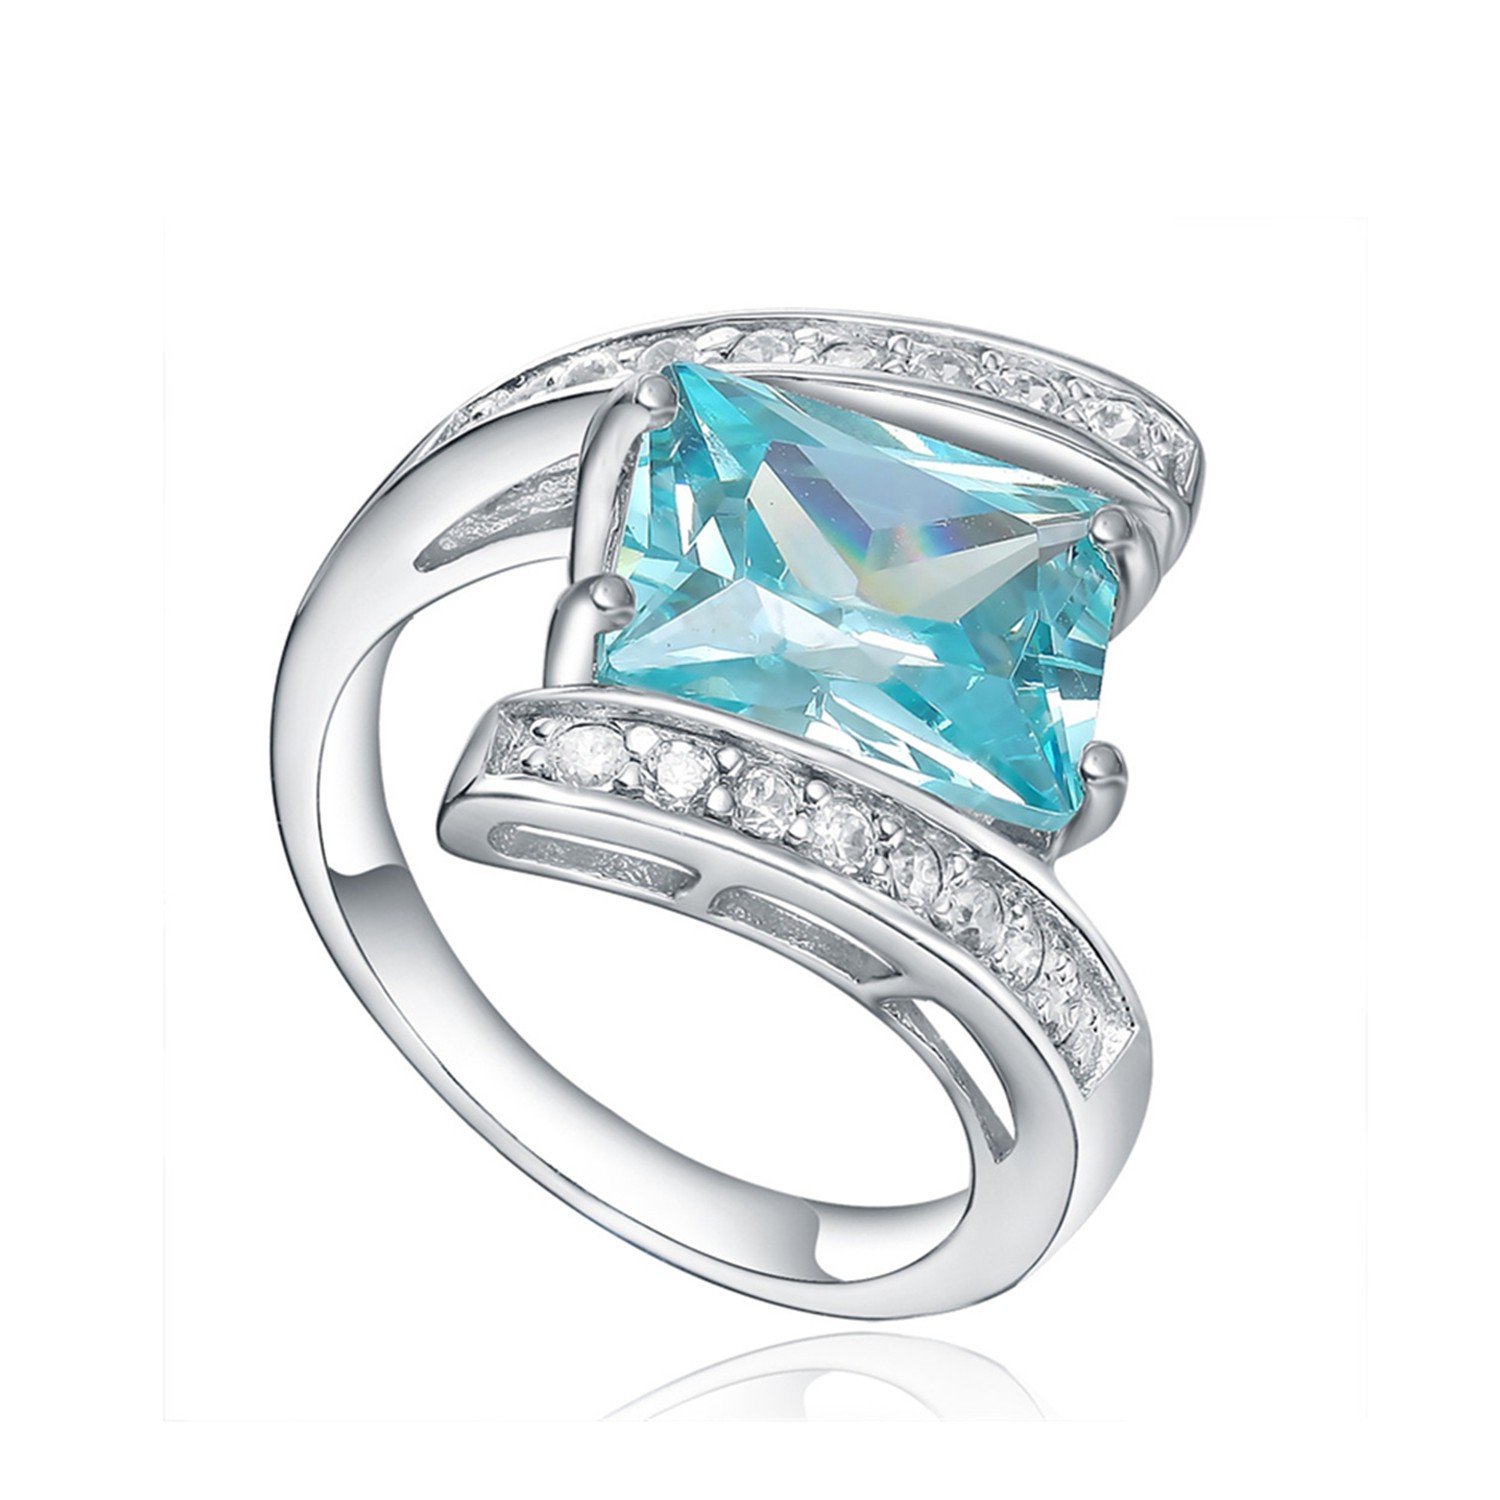 "Fashion silver blue zircon ring, shine your beauty